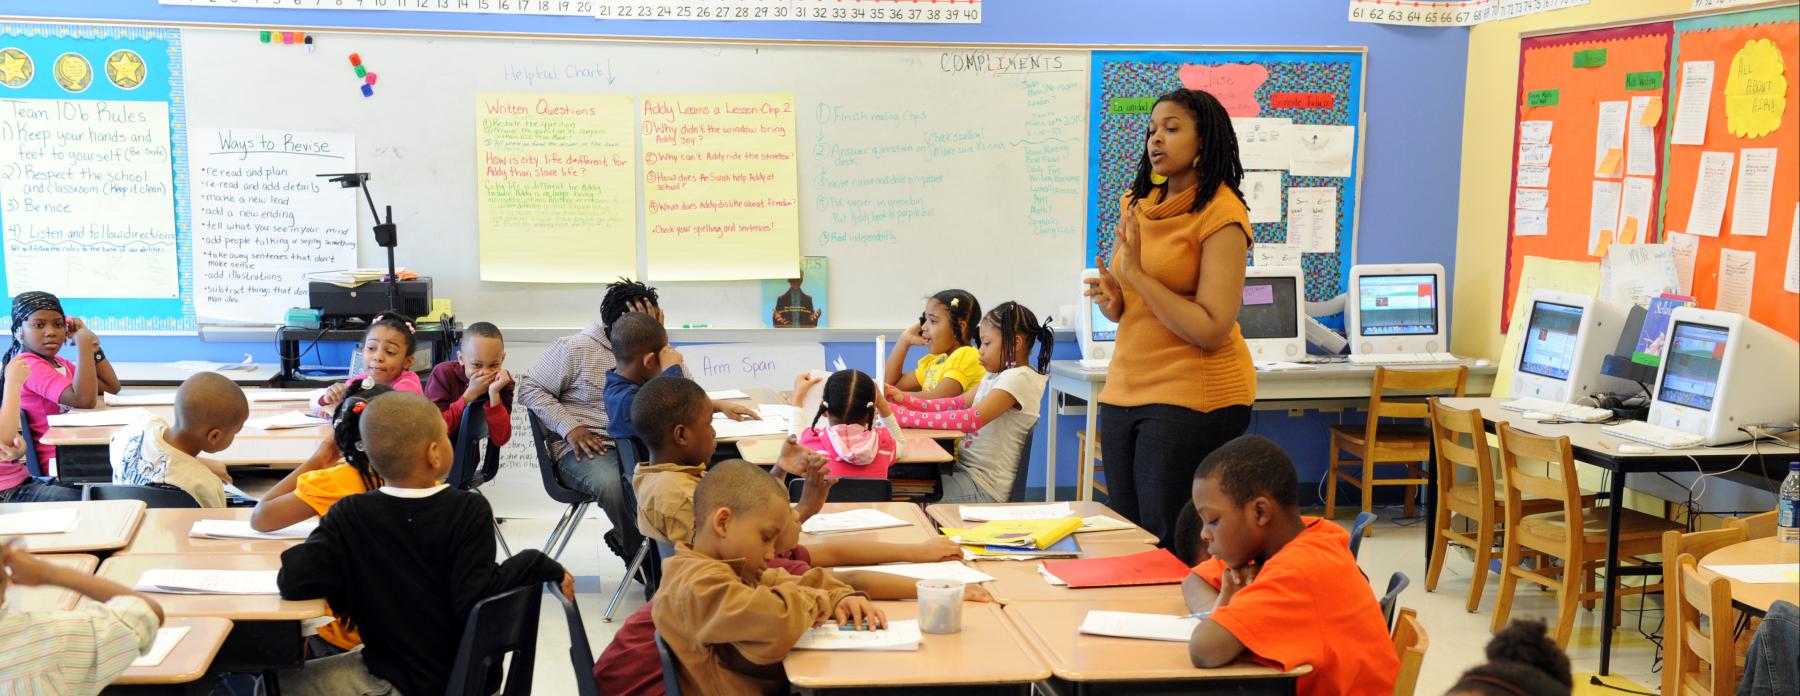 A teacher leads a class of elementary school students